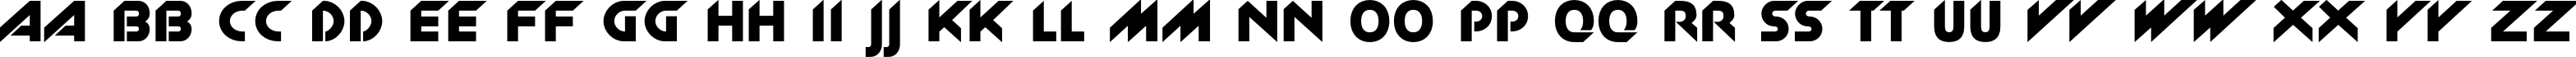 Пример написания английского алфавита шрифтом NewZelek